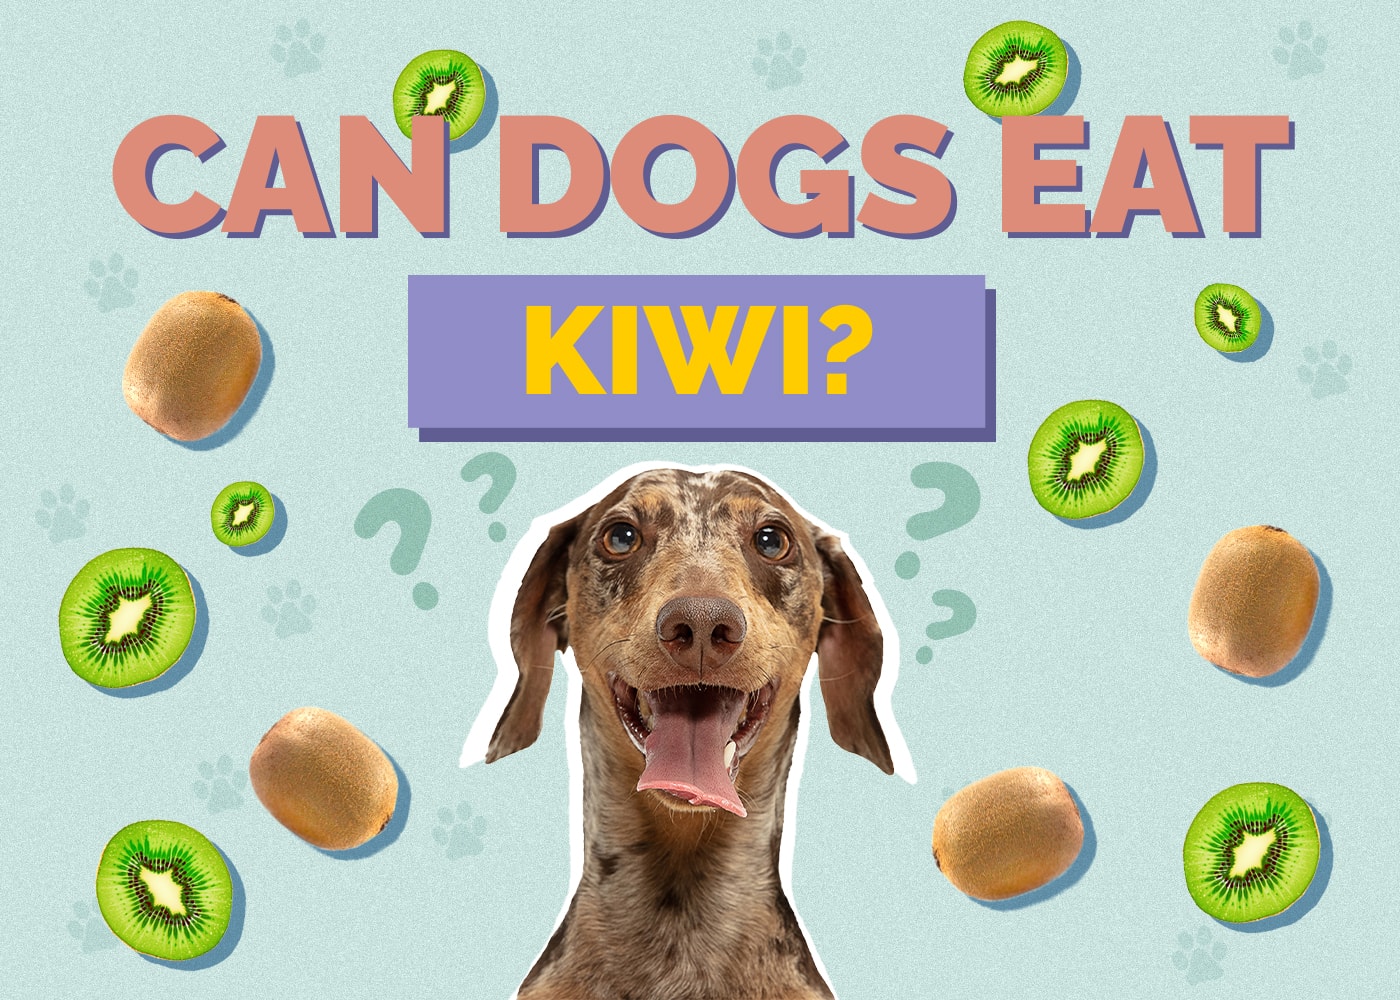 Can Dogs Eat kiwi